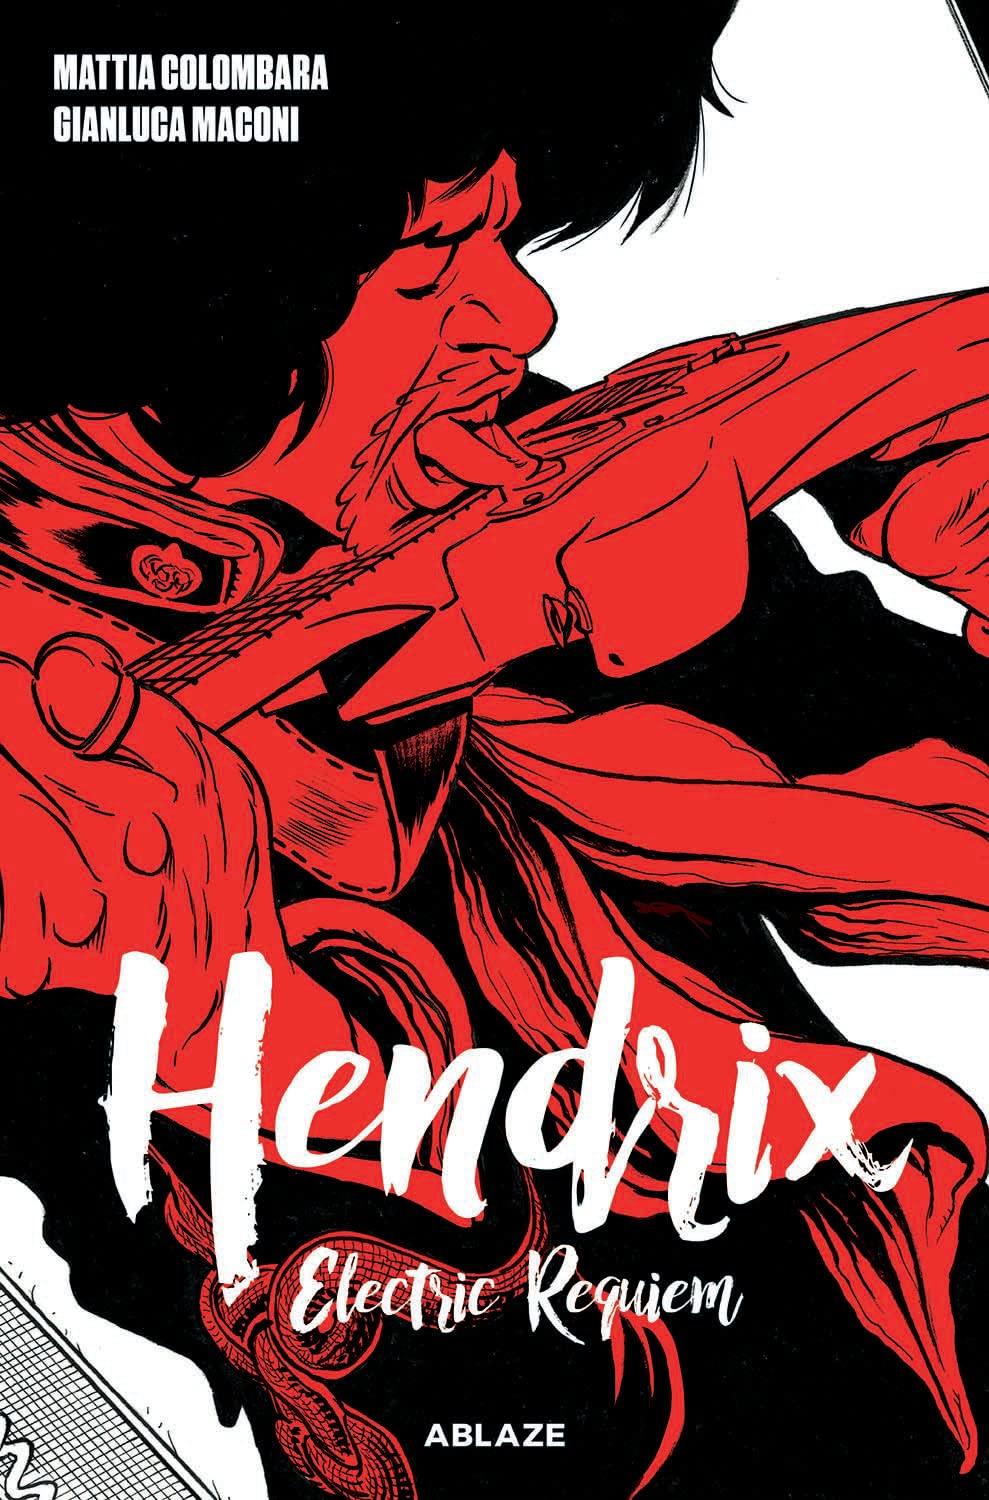 hendrix book cover